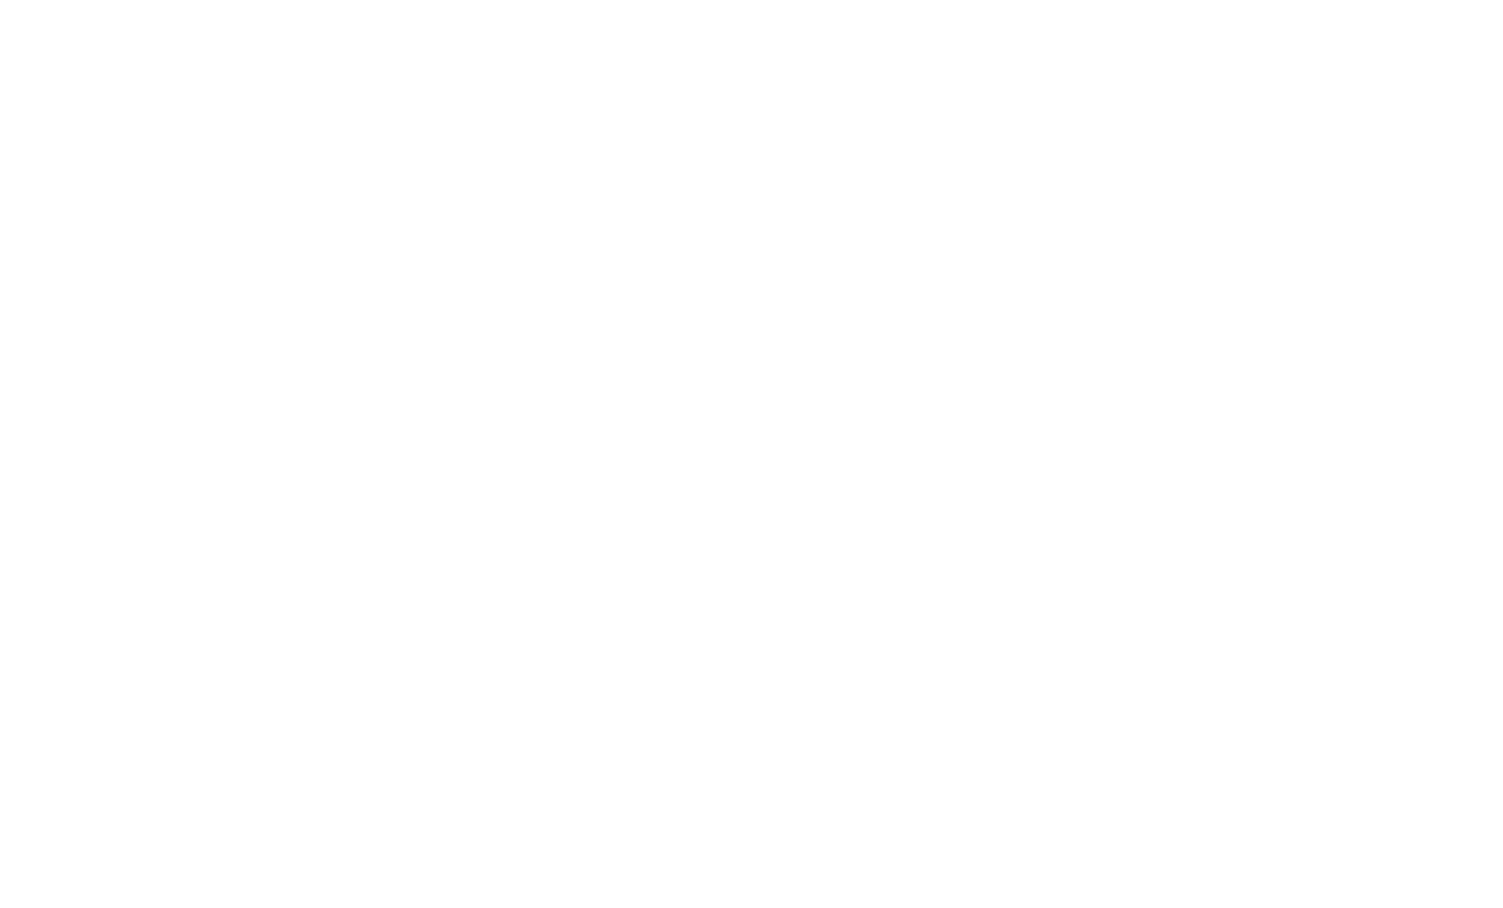 Lisbon Film Festival 2016 - Official selection